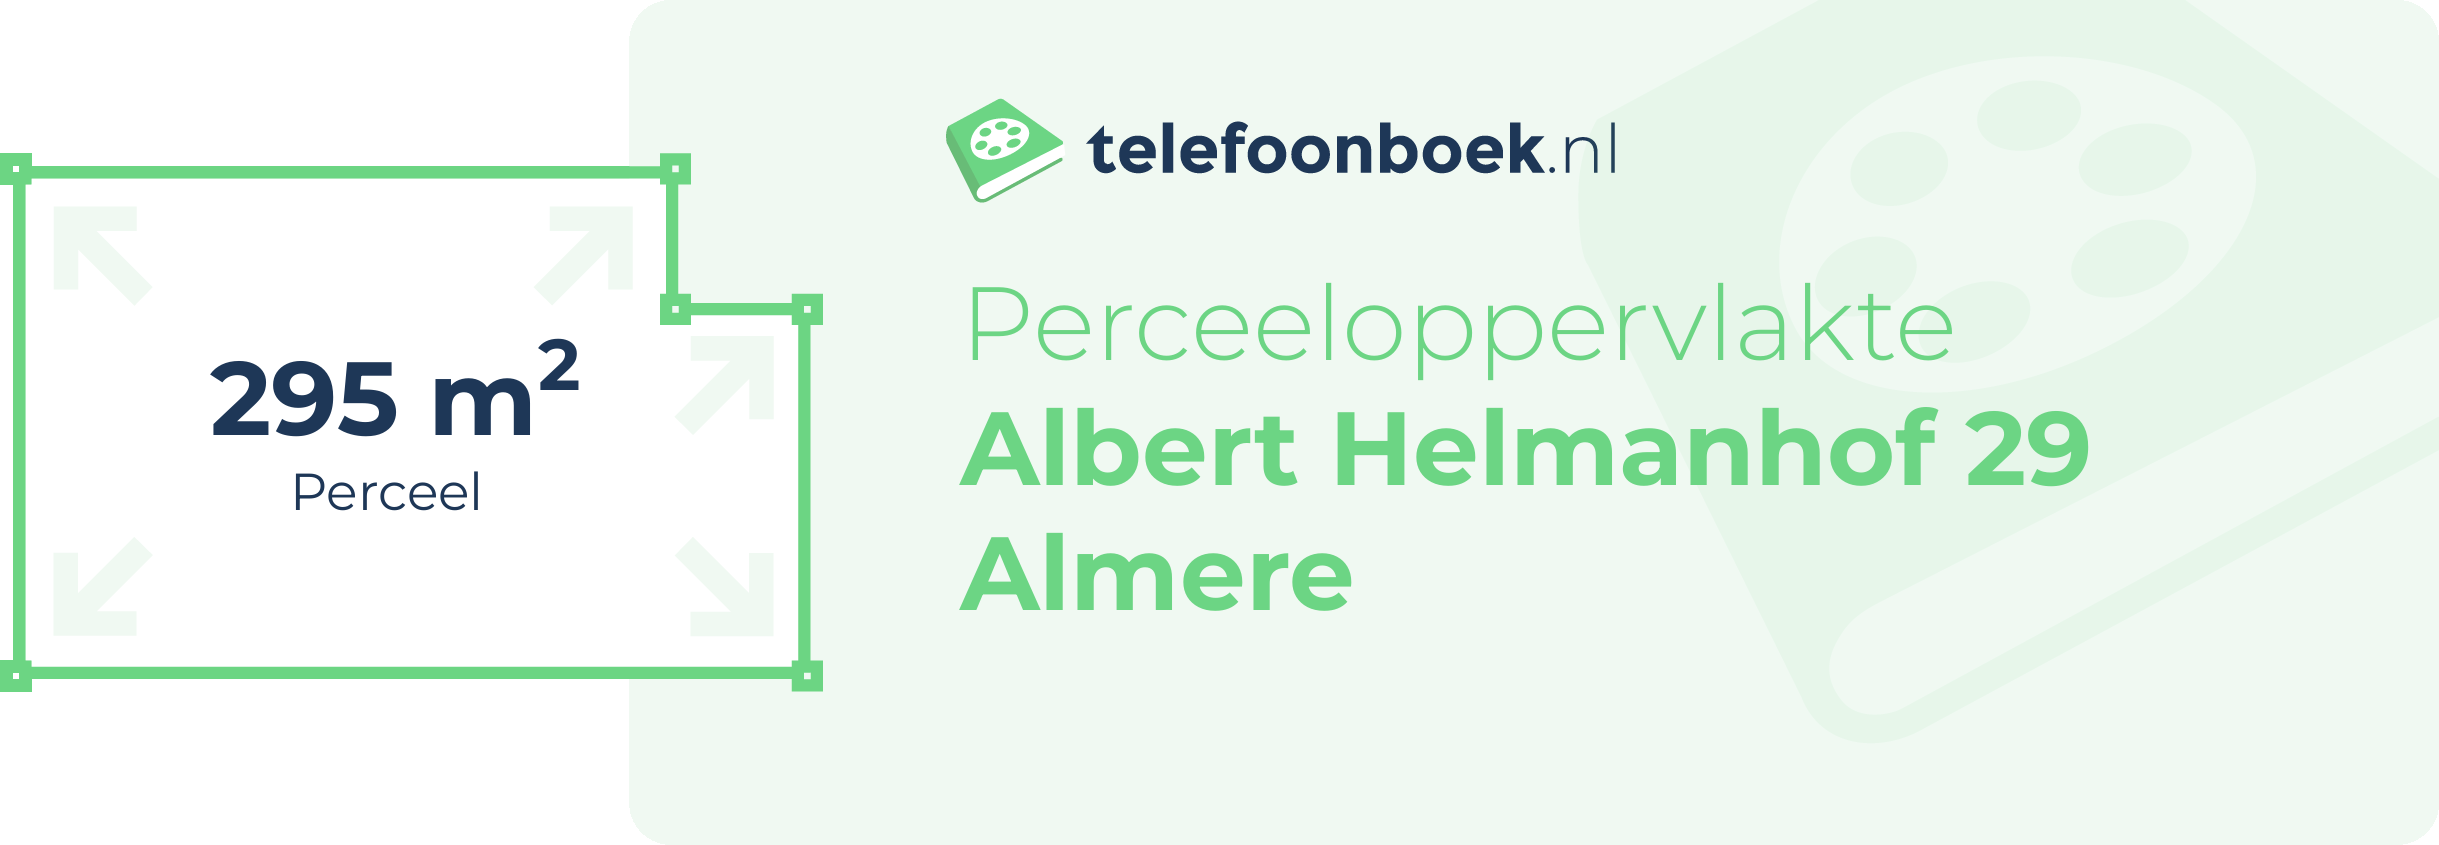 Perceeloppervlakte Albert Helmanhof 29 Almere